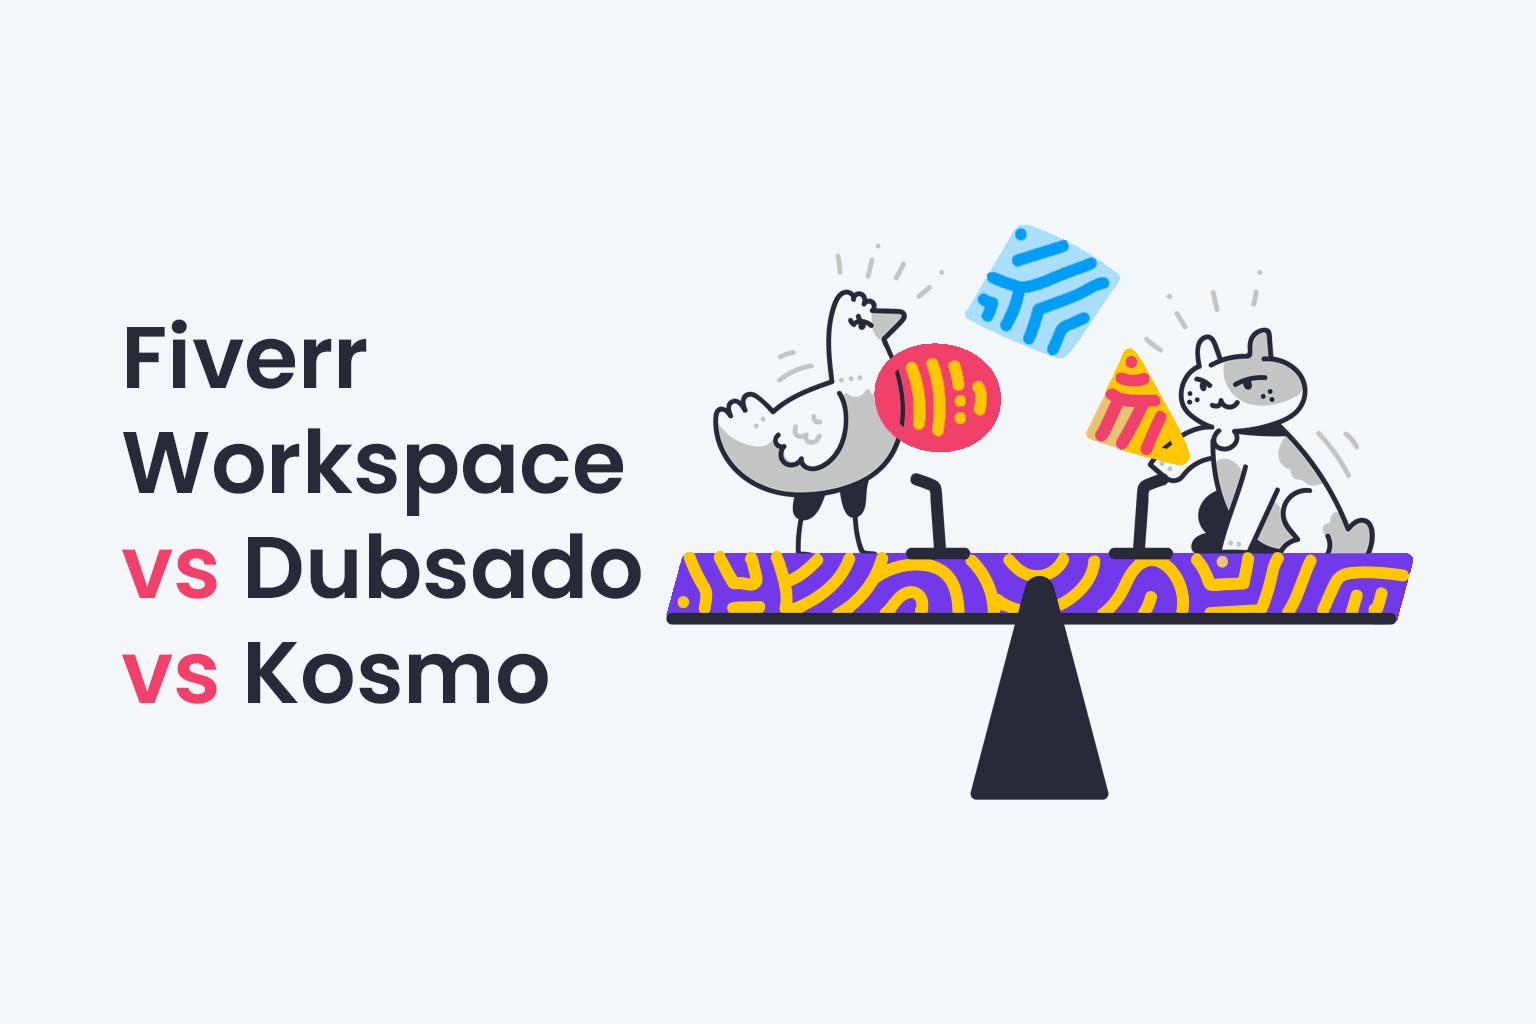 Fiverr Workspace vs Dubsado vs Kosmo